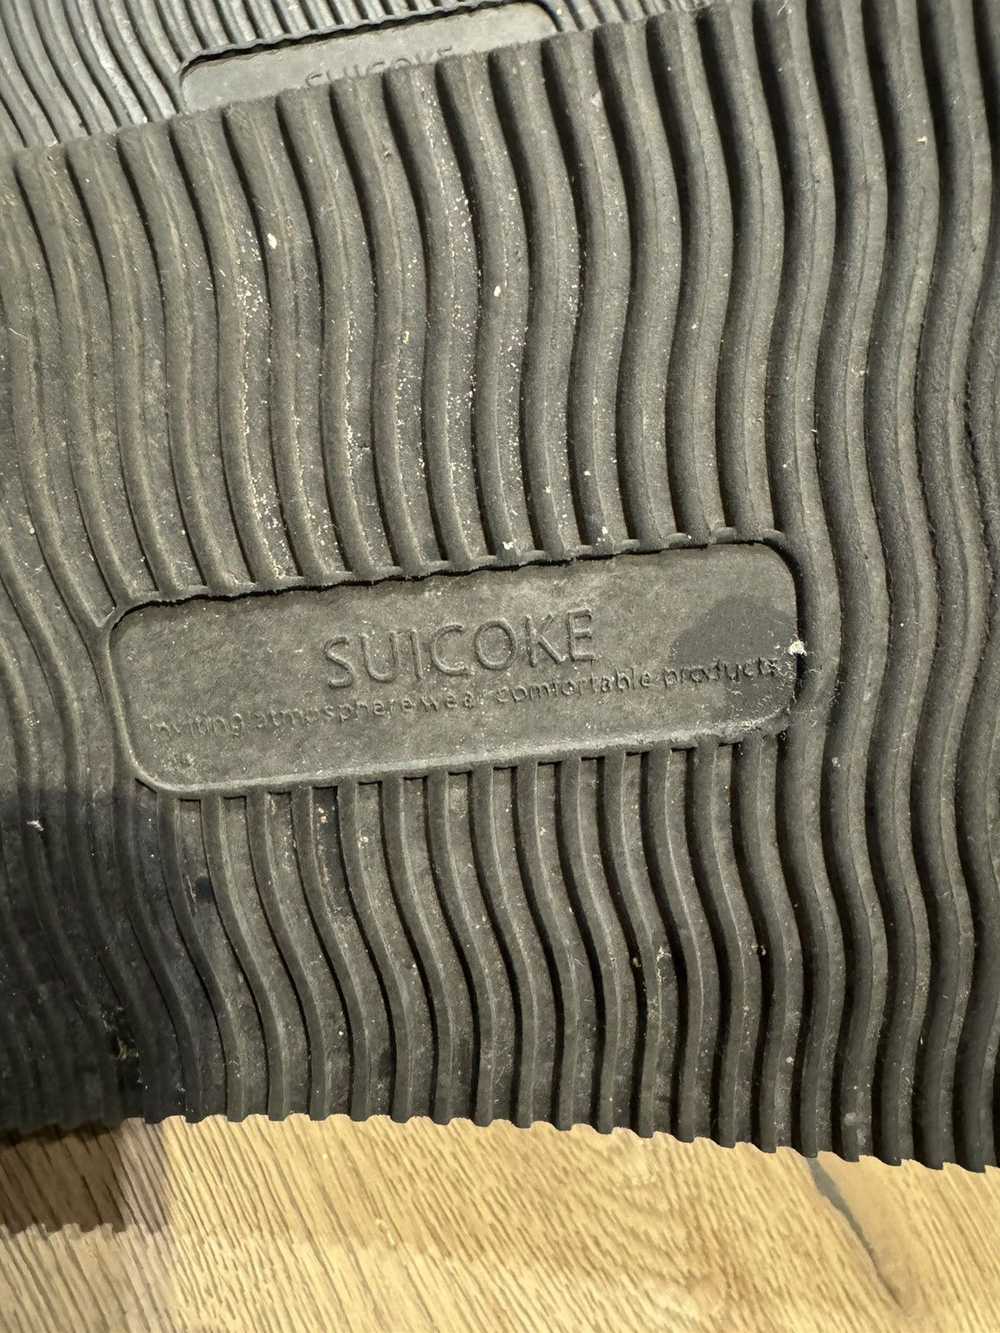 Suicoke Suicoke Moto Cab Black sandals UK11 EU45 - image 6